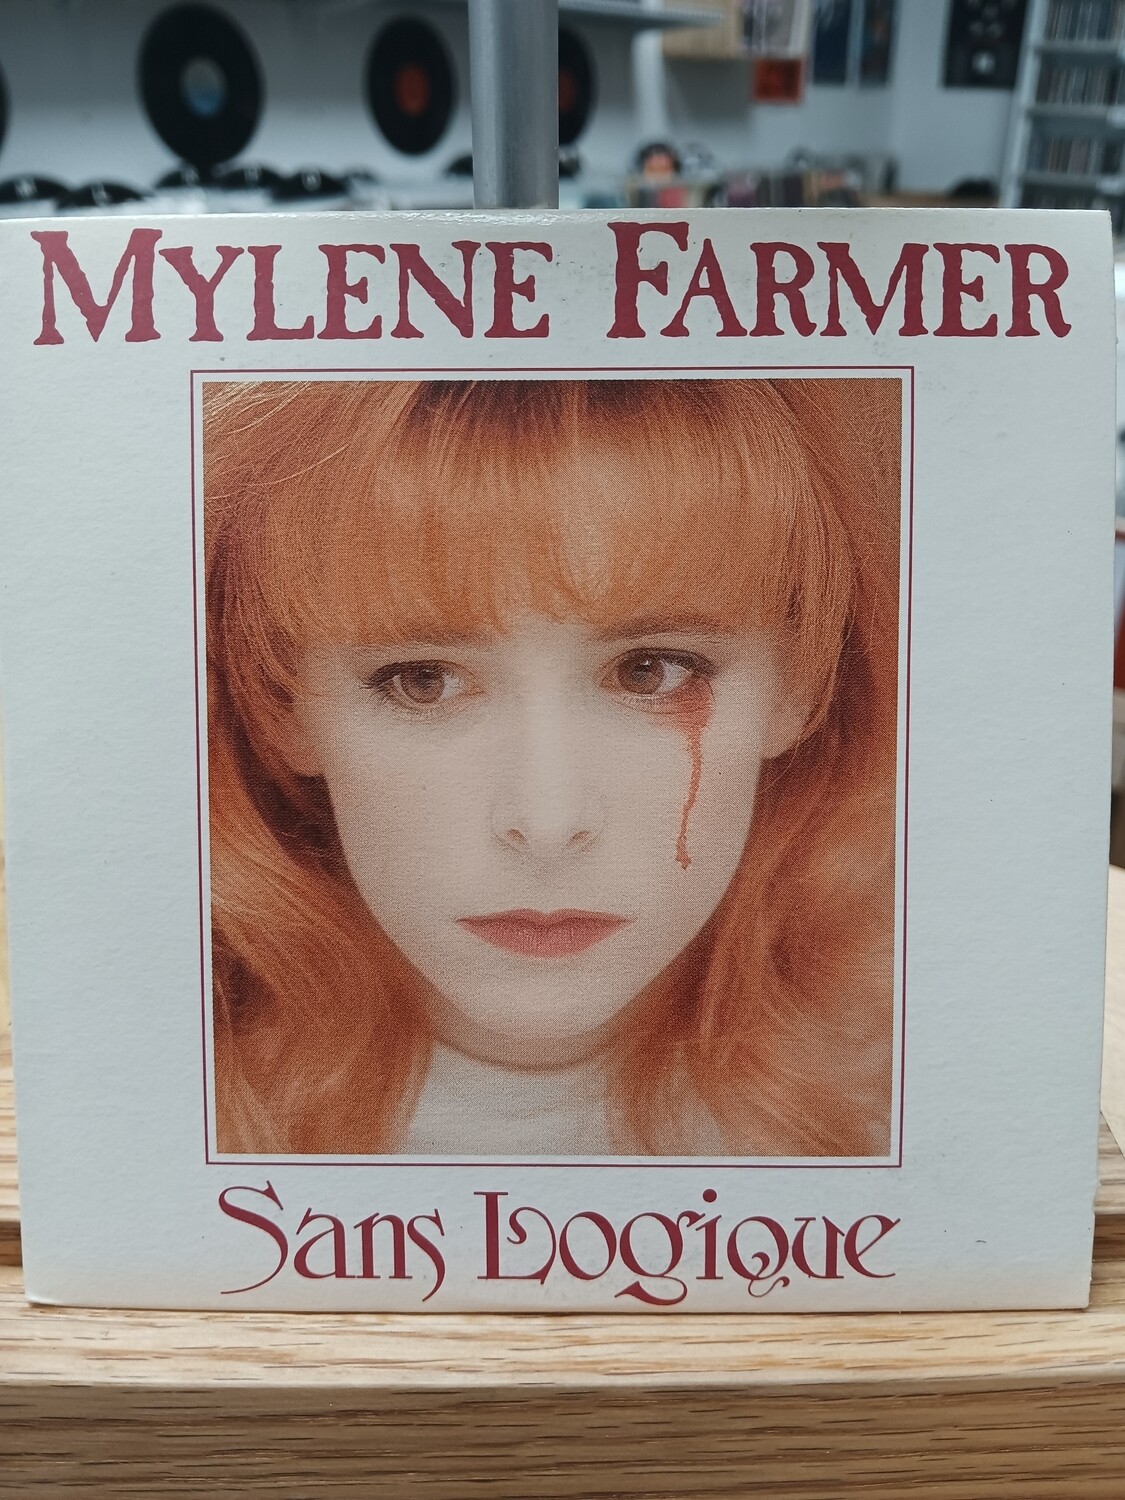 Mylene Farmer - Sans logique (CD)